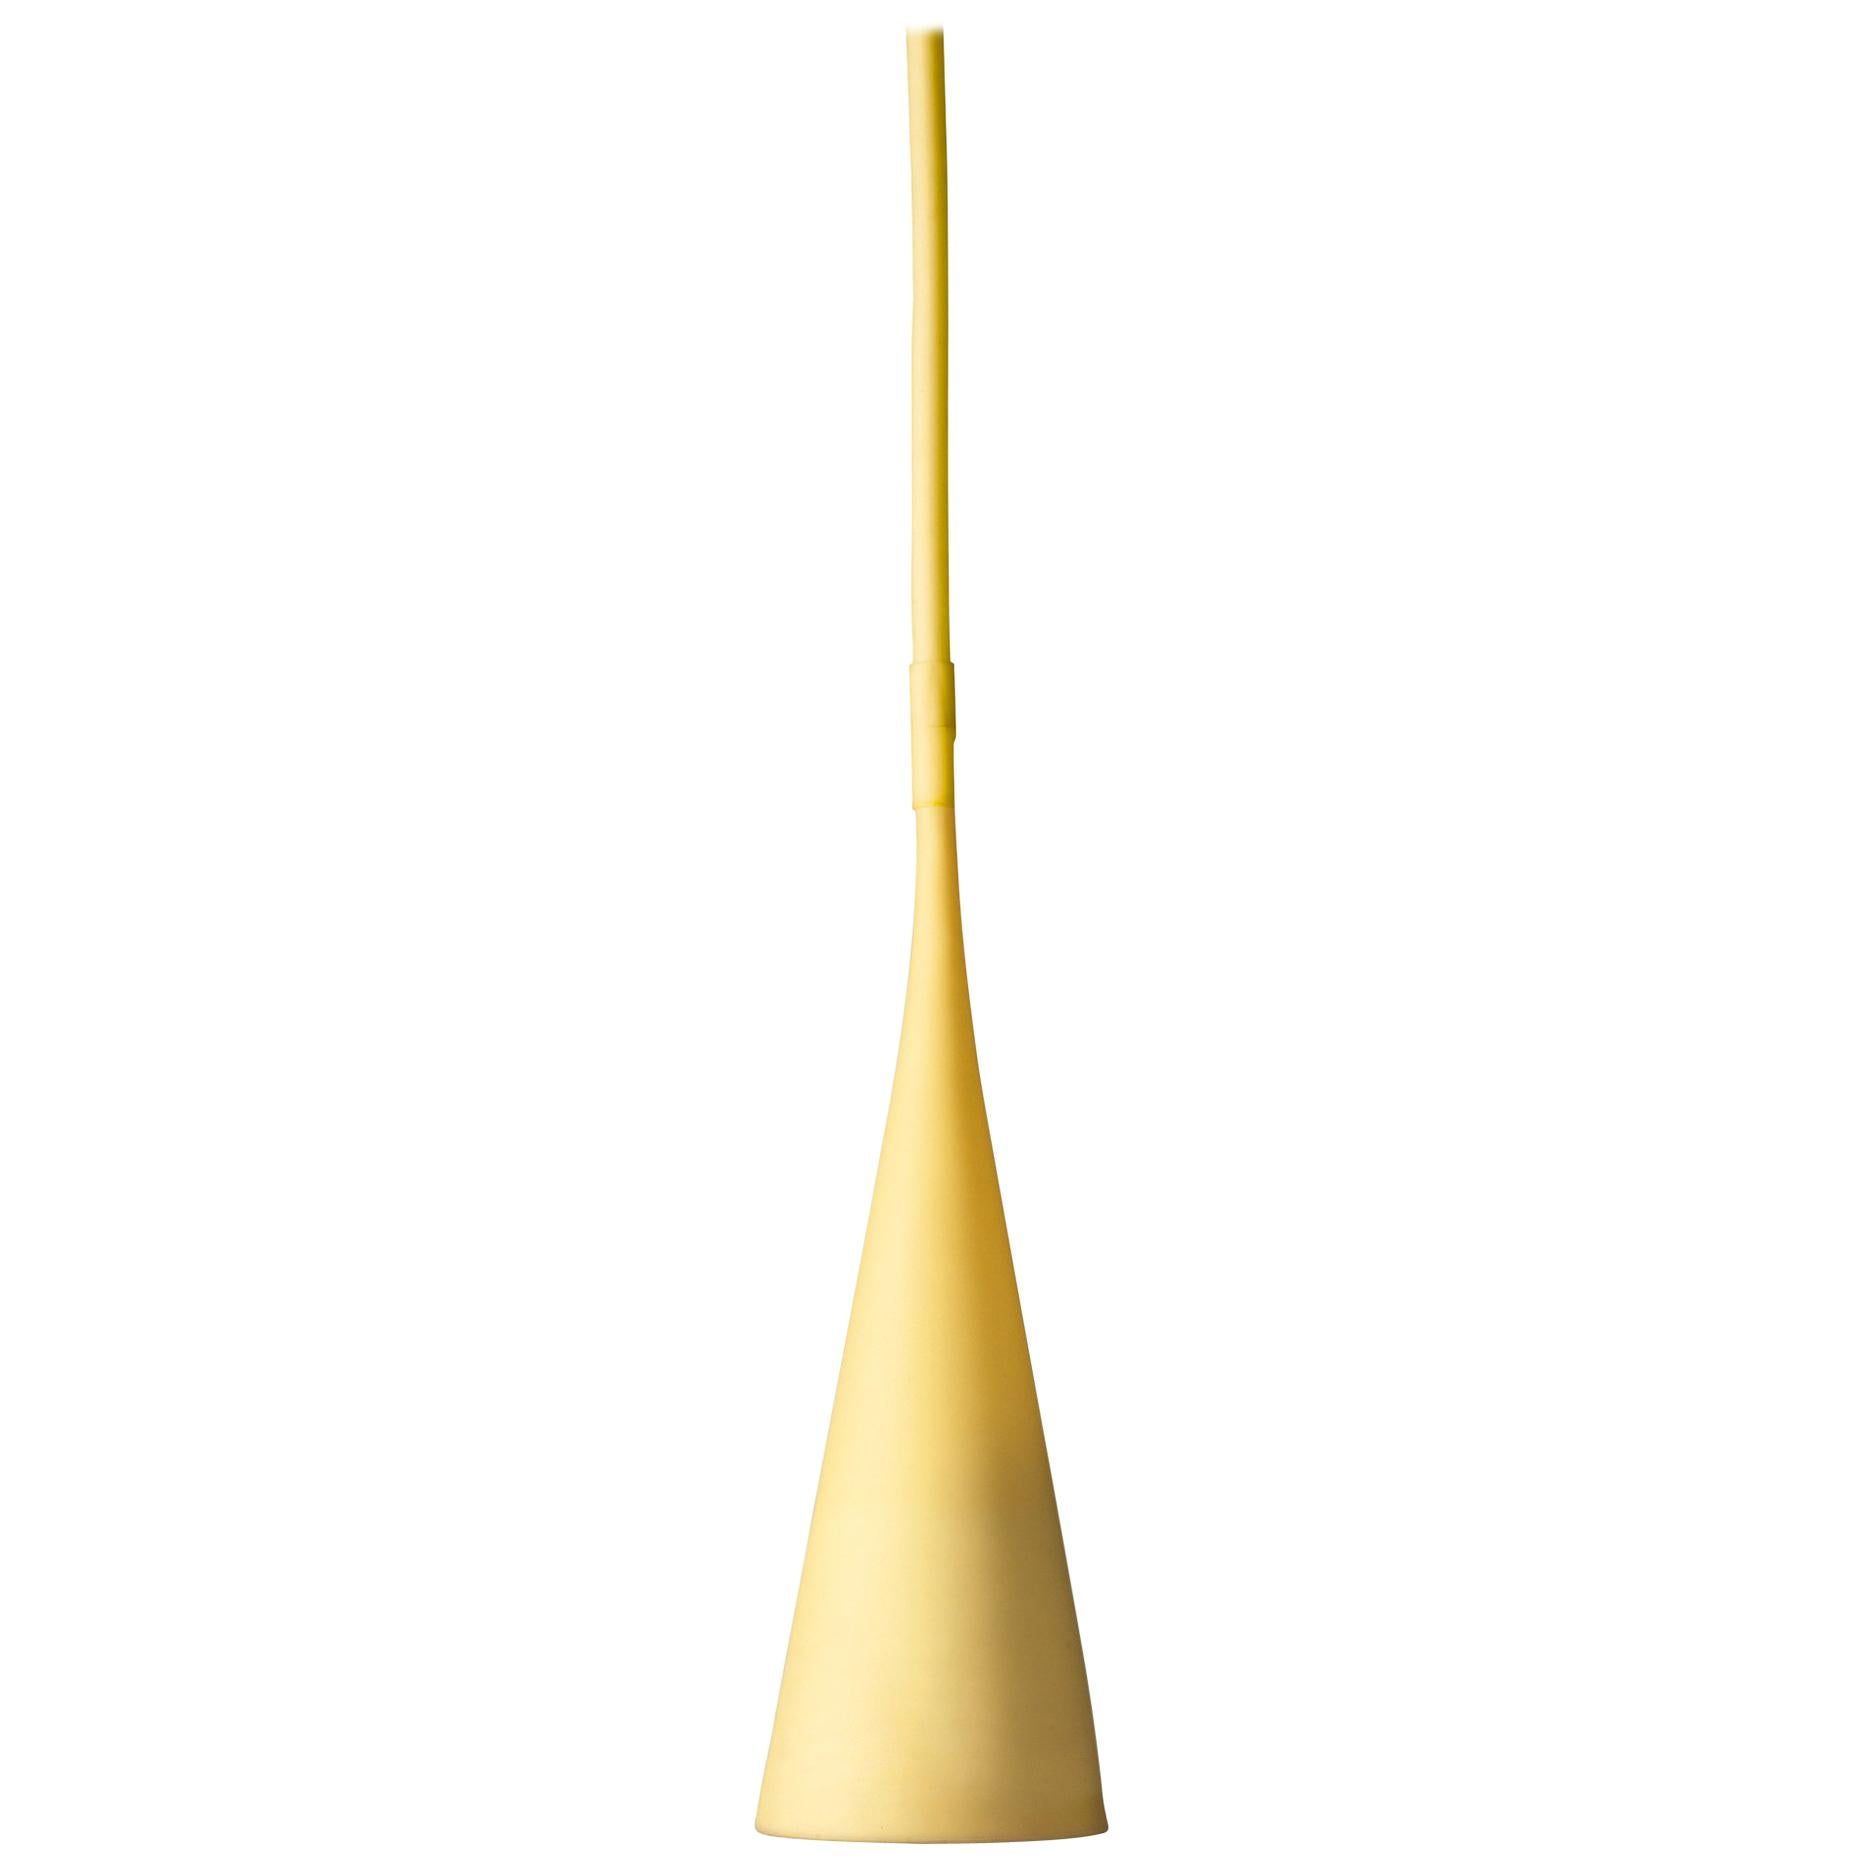 Foscarini UTO Hänge-/Table-Lampe in Gelb von Lagranja Design im Angebot